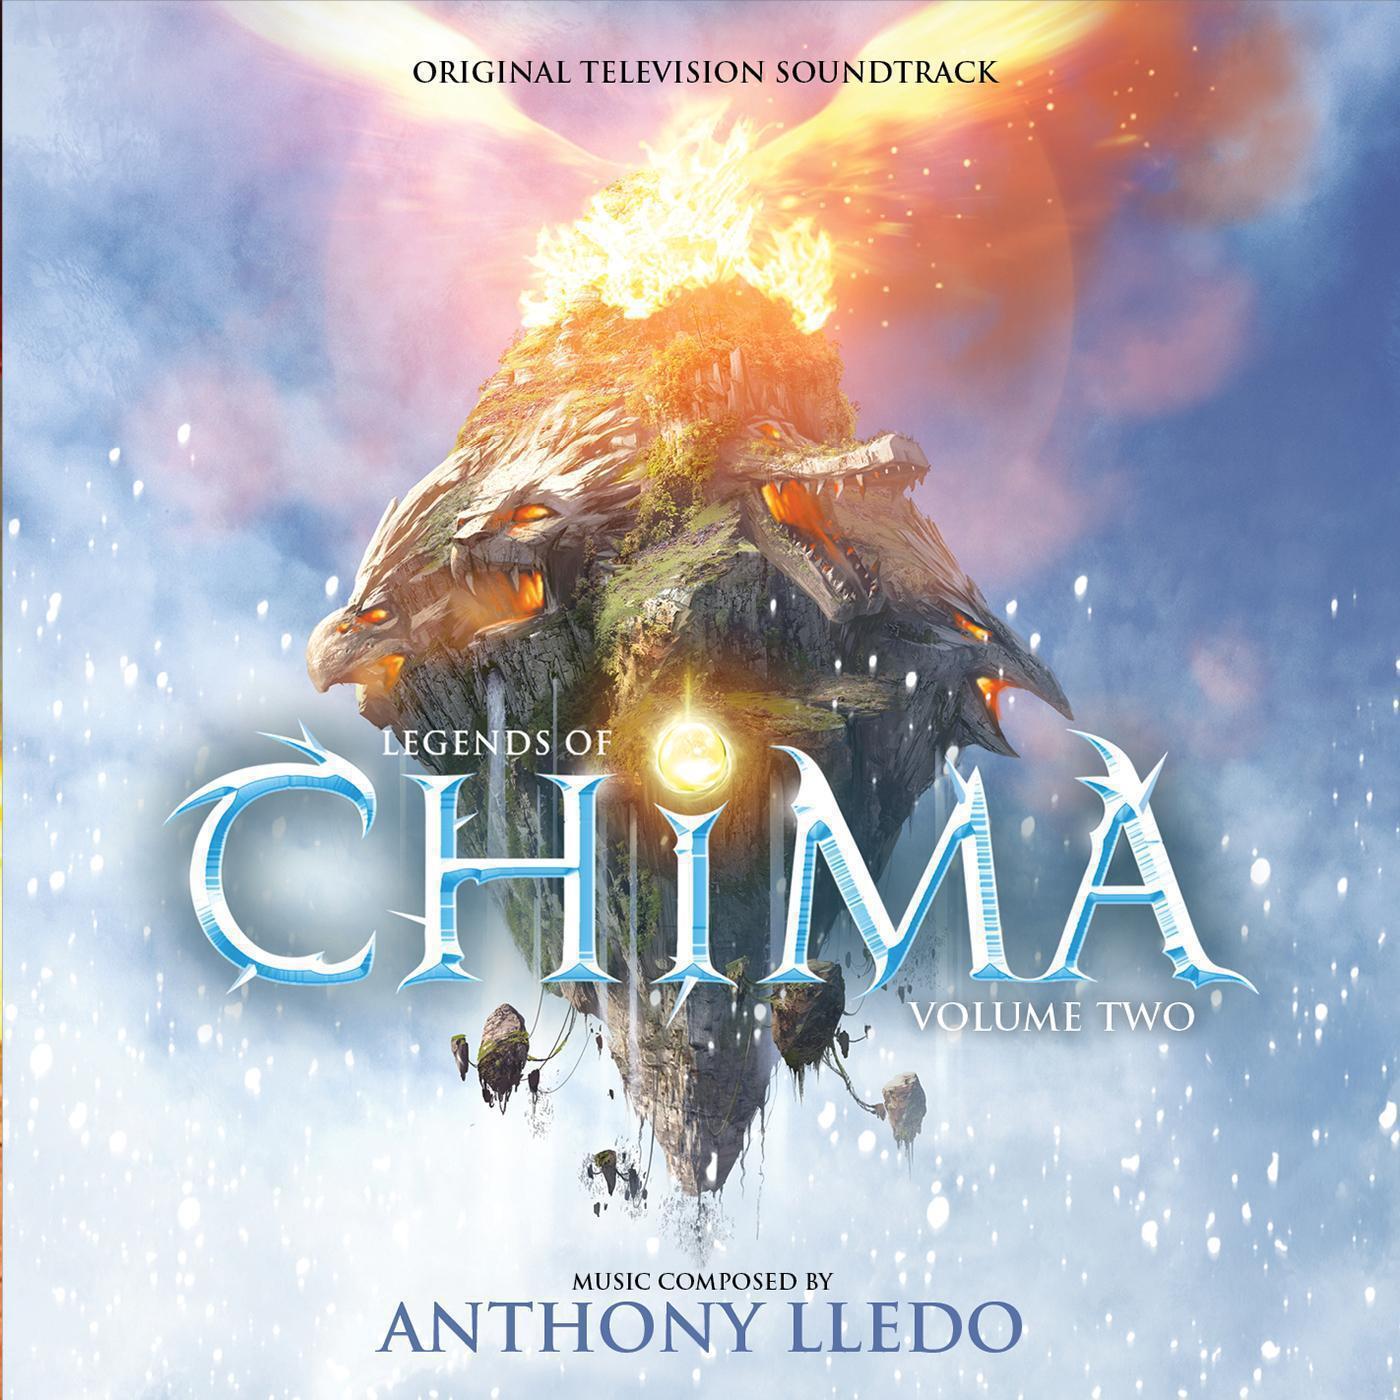 Legend саундтрек. Anthony Chima. Legend of Chima Soundtrack.